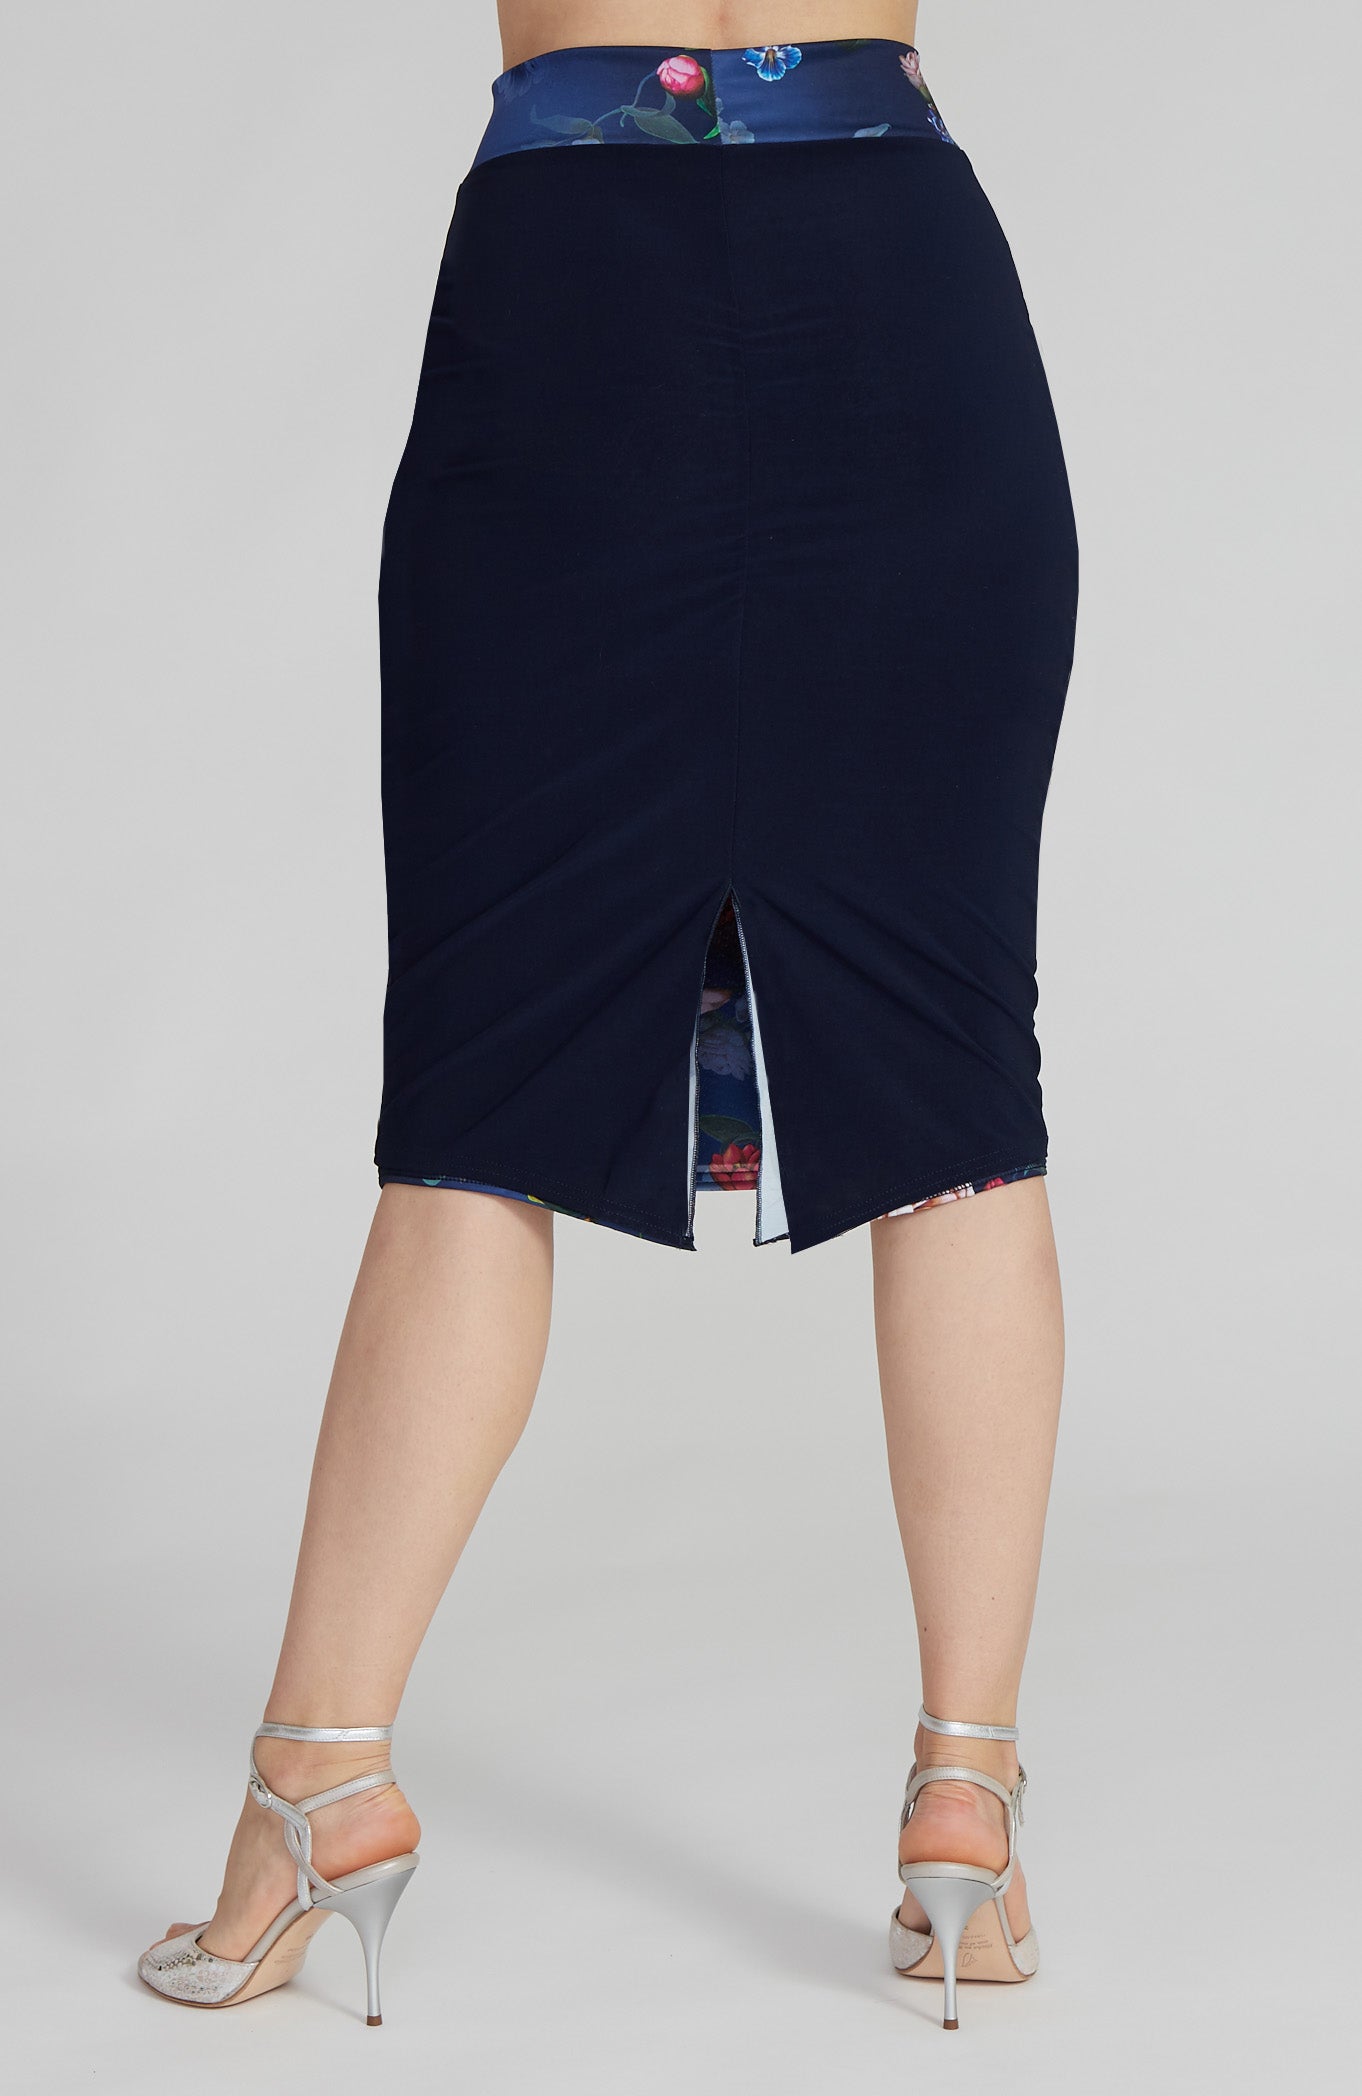 CLARA - Reversible Skirt in Vivid Blossoms & Navy Blue